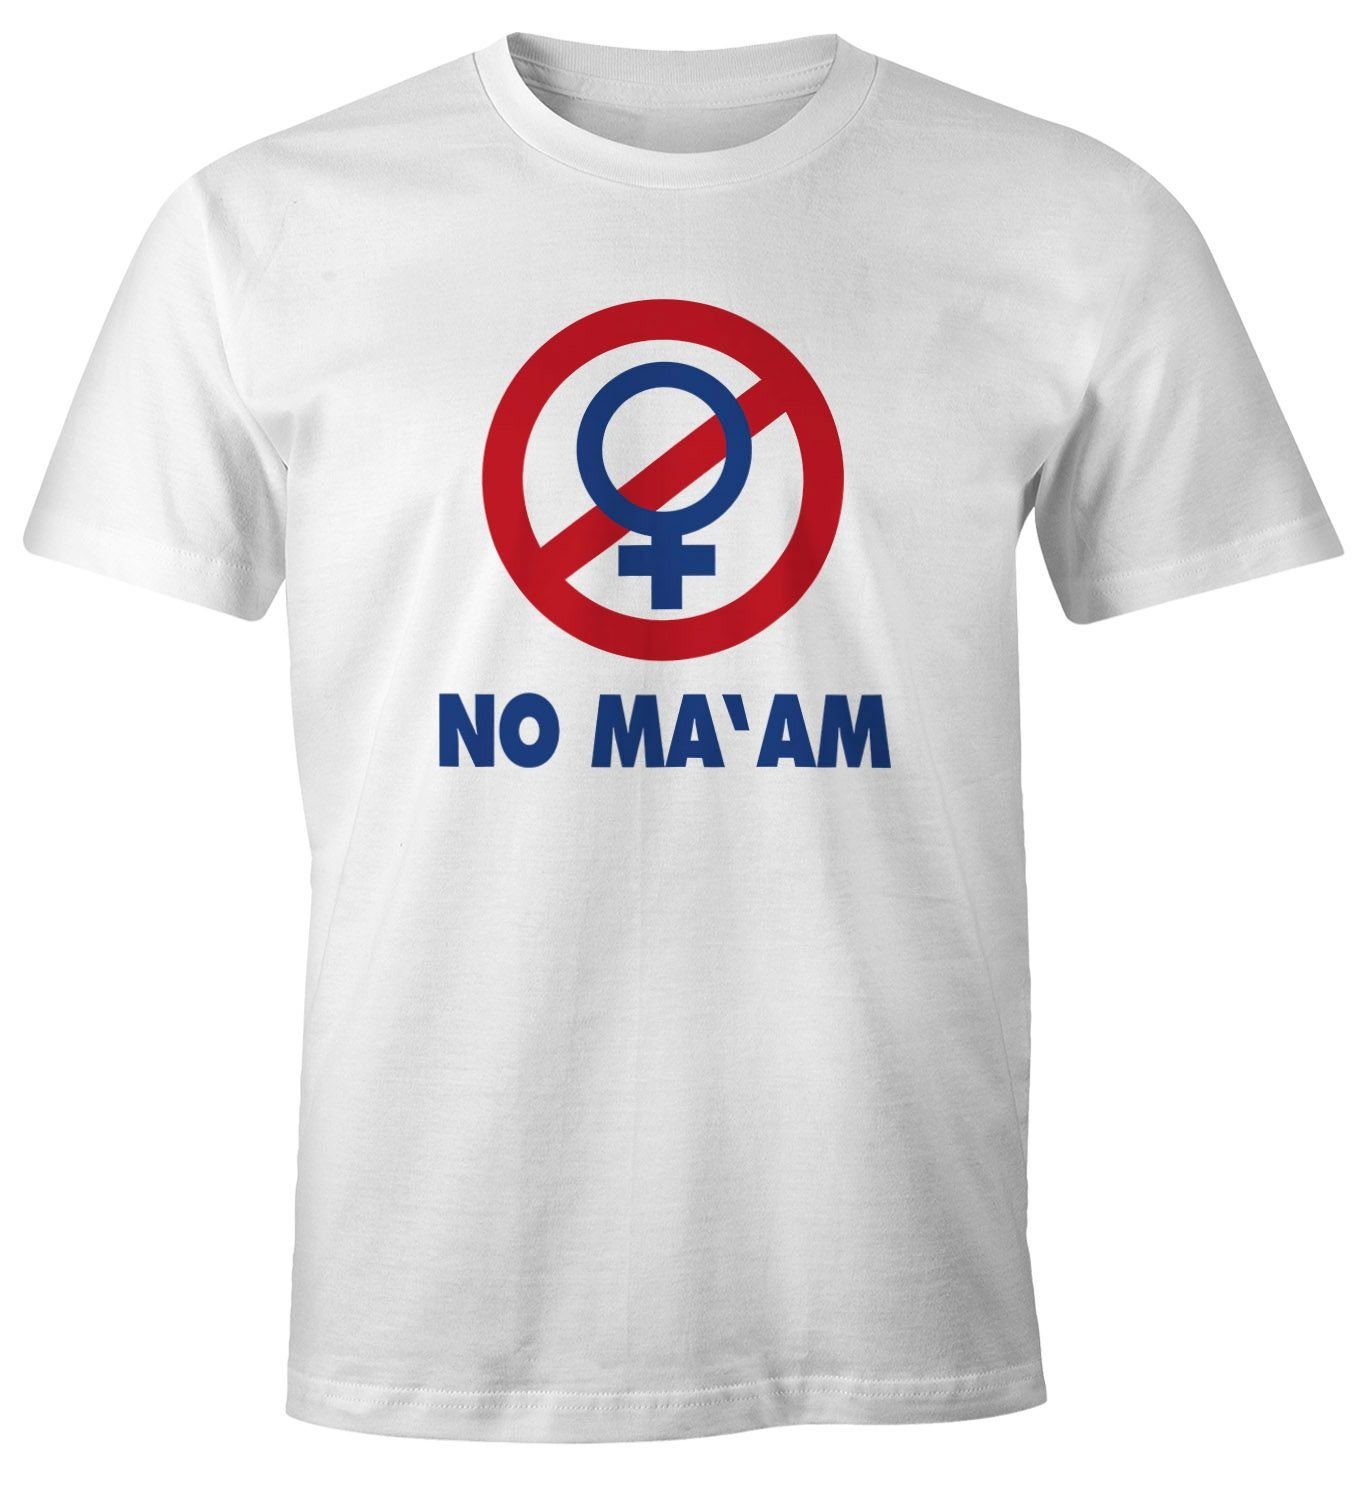 Herren MoonWorks No Karneval Club Moonworks® Maam T-Shirt Junggesellenabschied mit Ma'am Fun-Shirt No Print Print-Shirt 90er Fasching